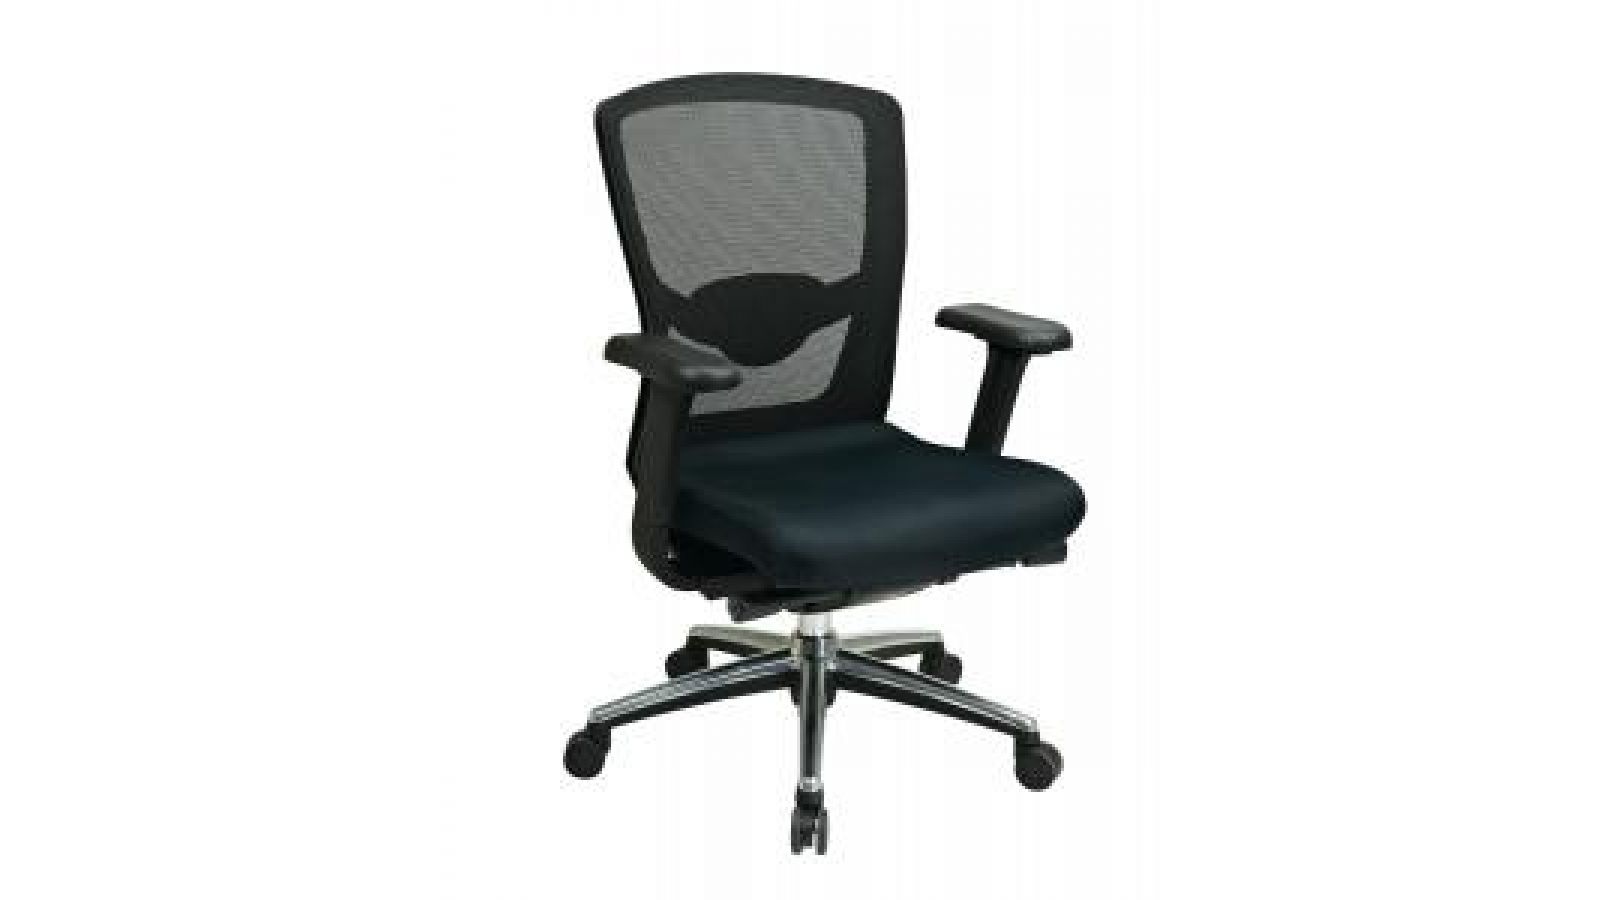 Pro-Line II Executive High Back Chair